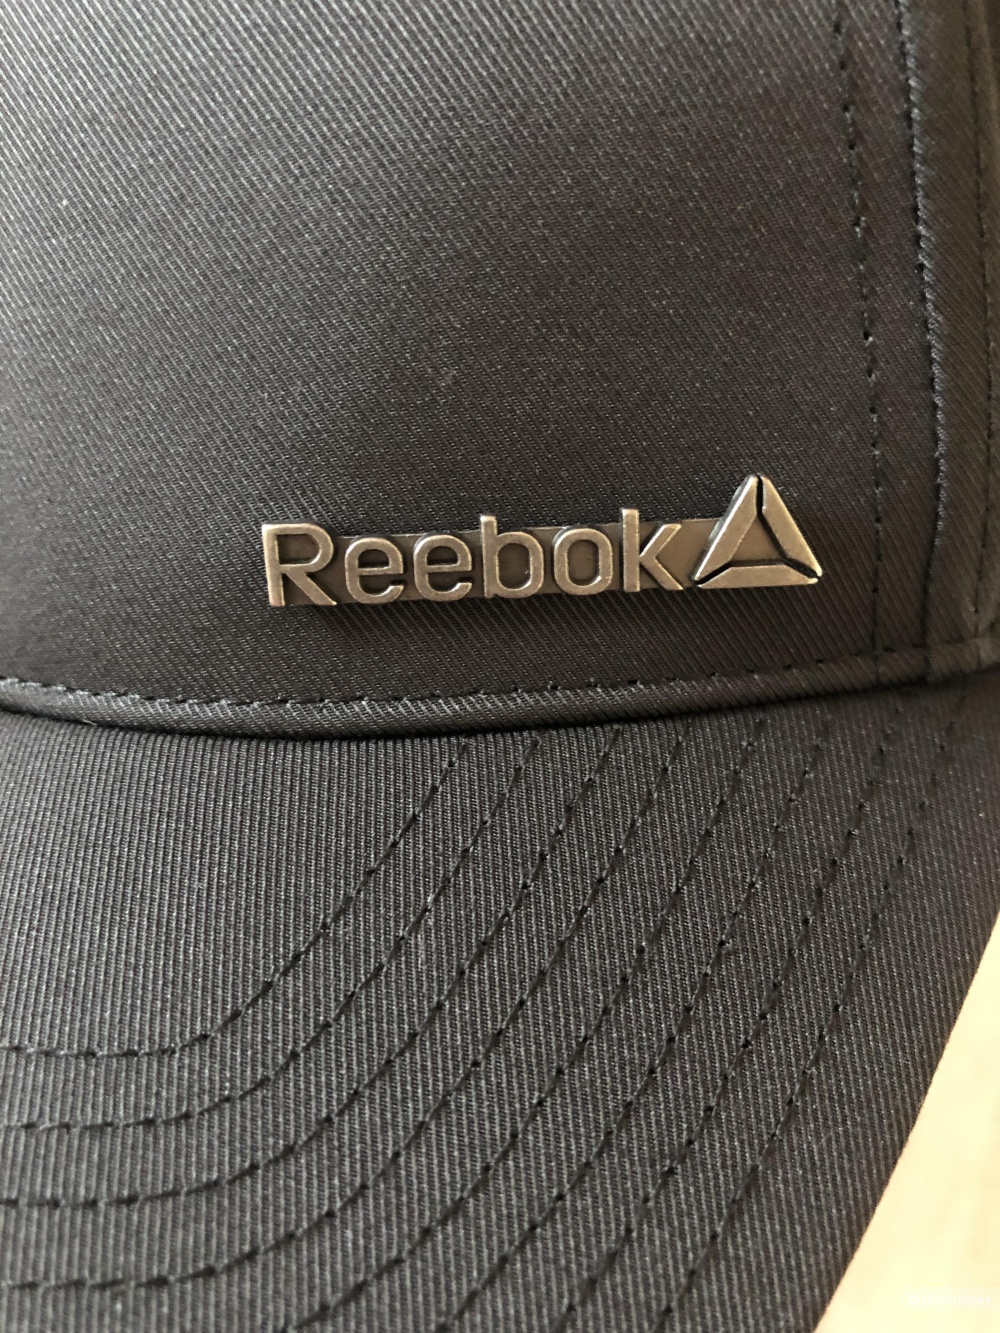 Кепка Reebok, one size